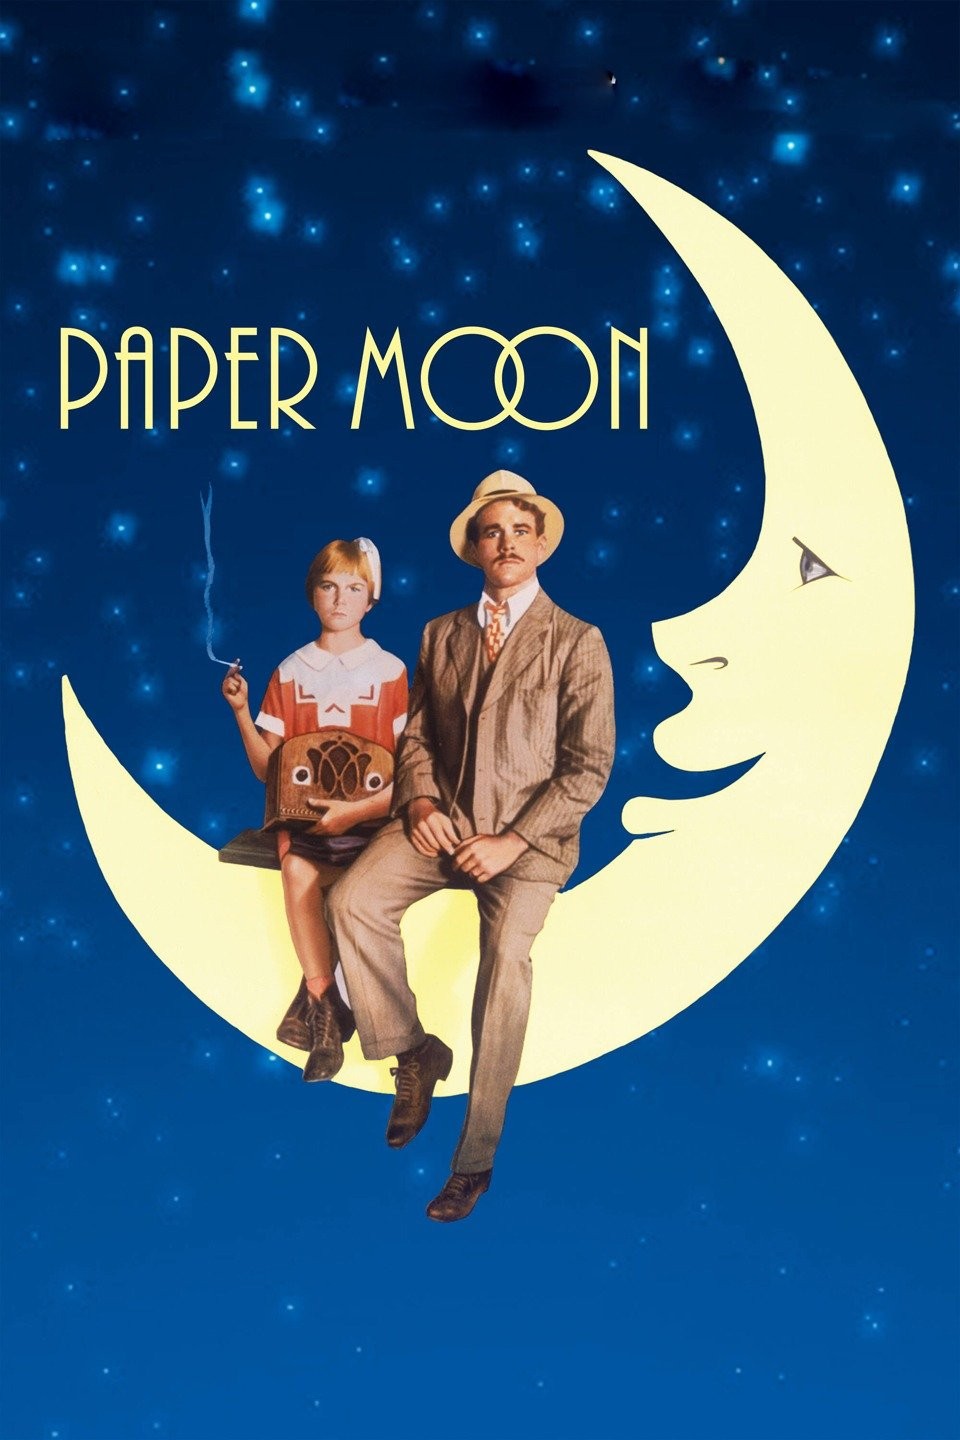 200 Dollars - Paper Moon (1/8) Movie CLIP (1973) HD 